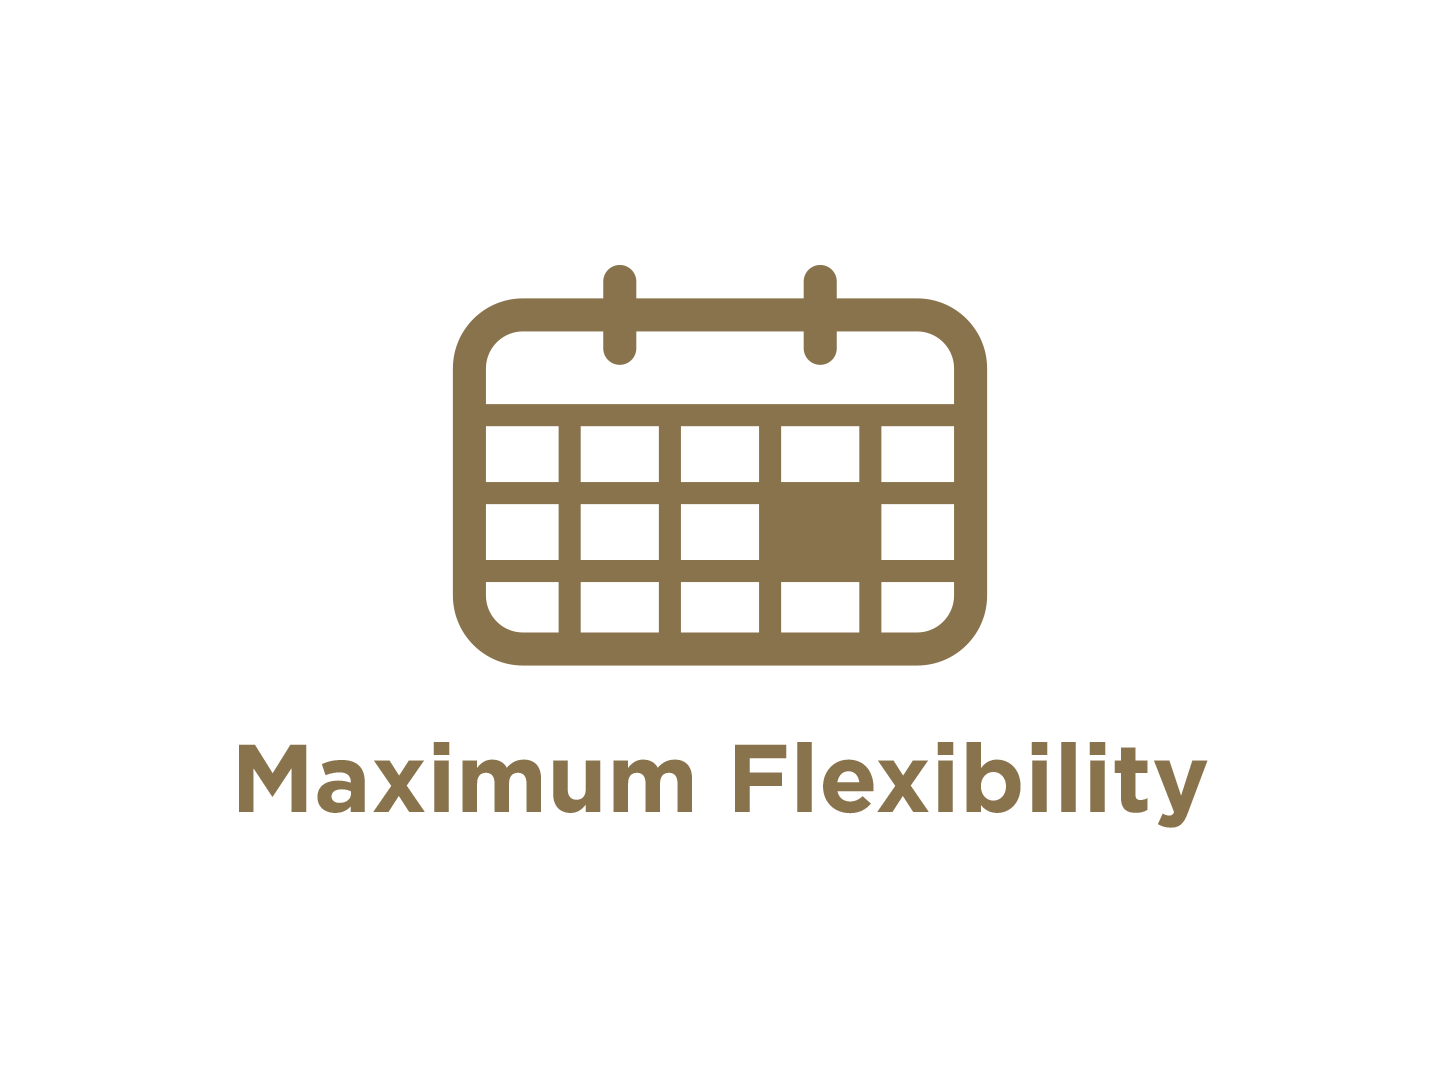 Maximum Flexibility